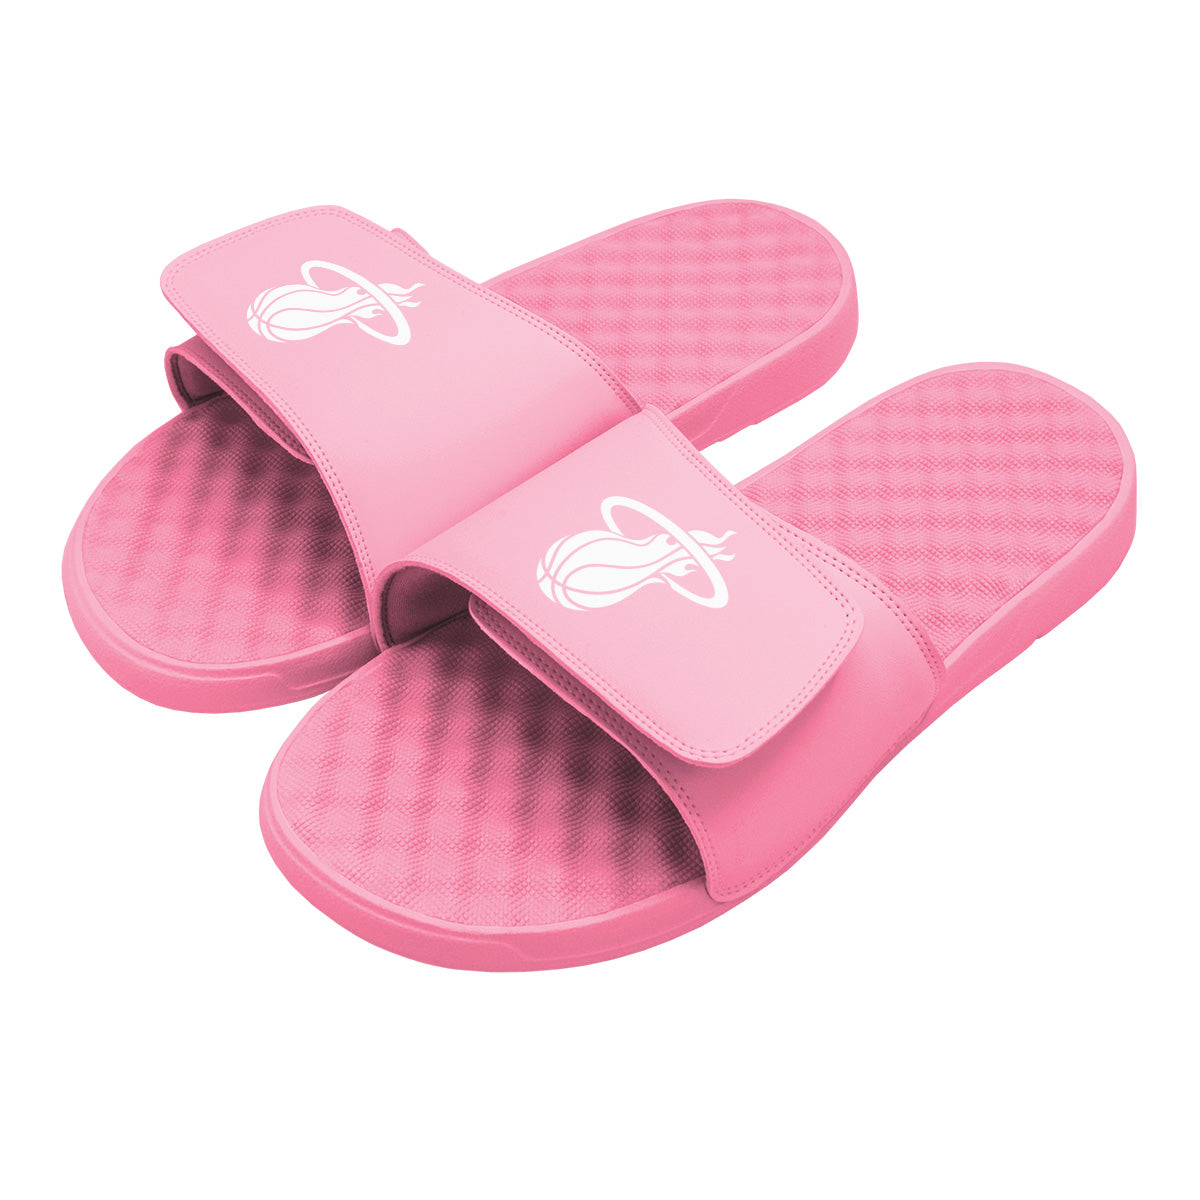 Miami Heat Primary Pink Slides